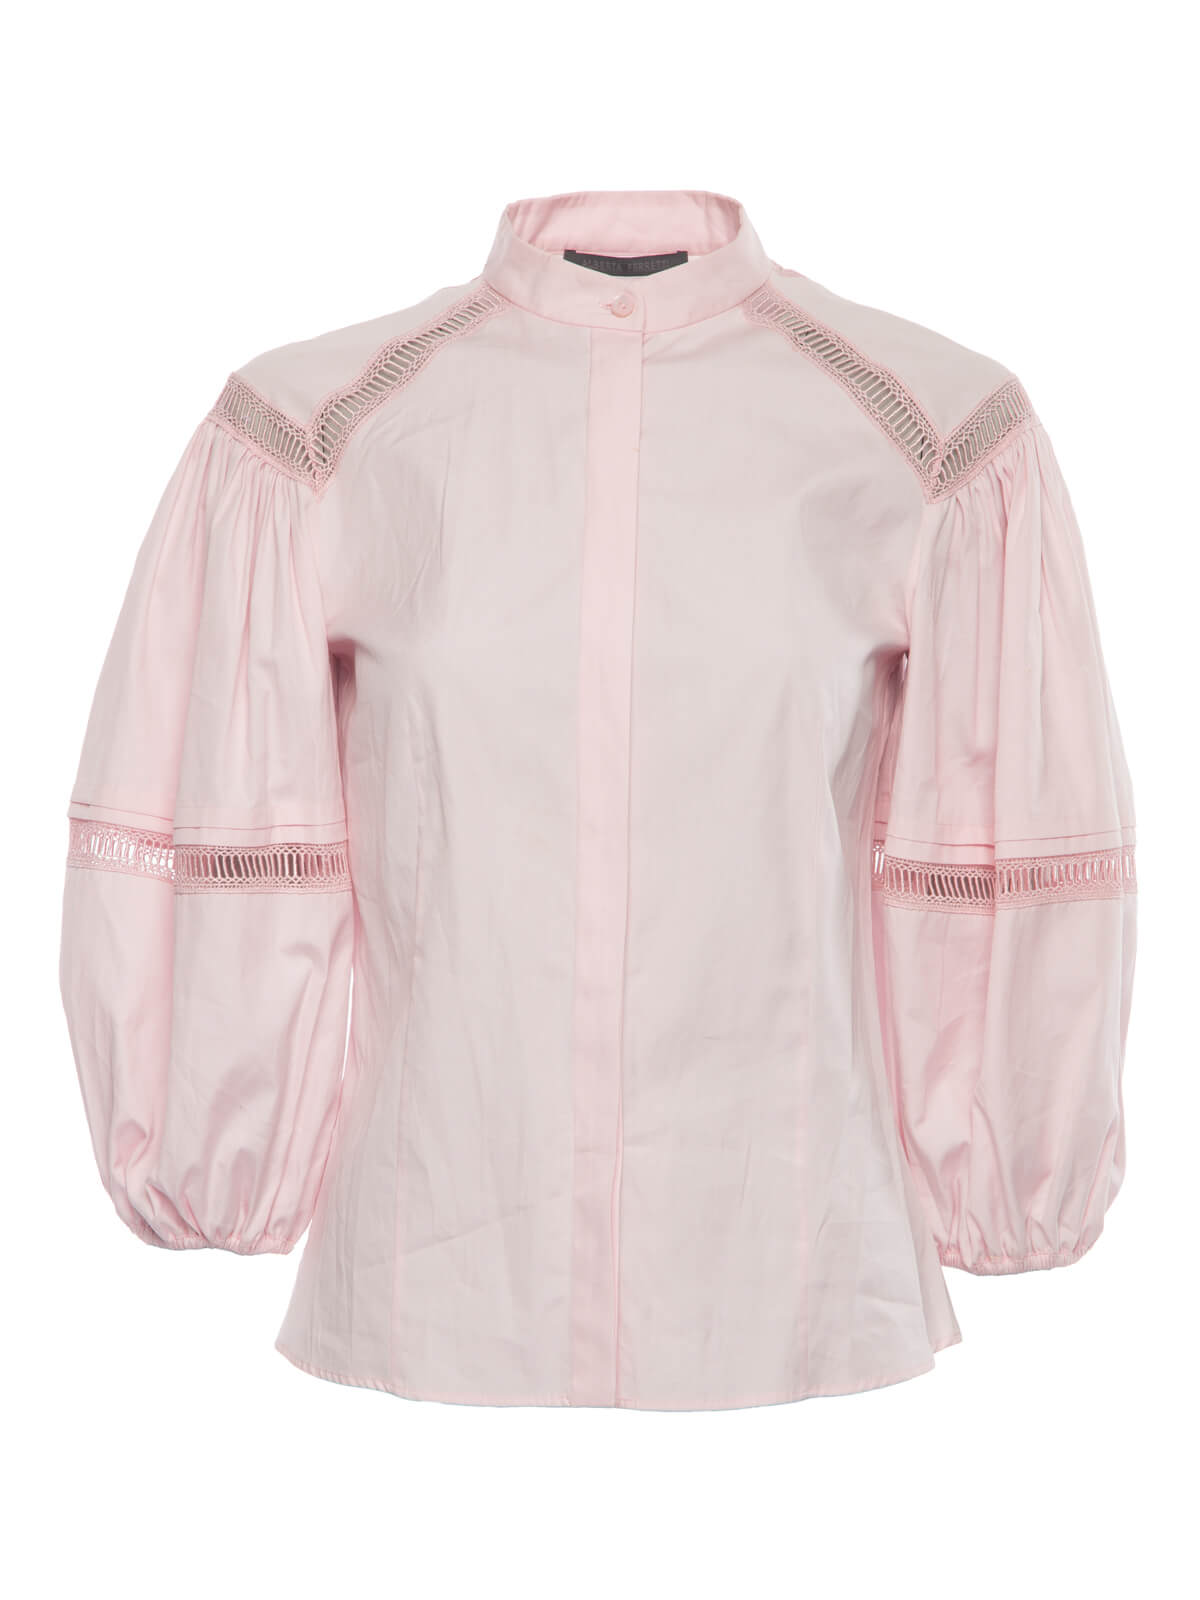 Alberta Ferretti Women's Embroidered Sweater, Size 6 UK, Light Pink Cotton